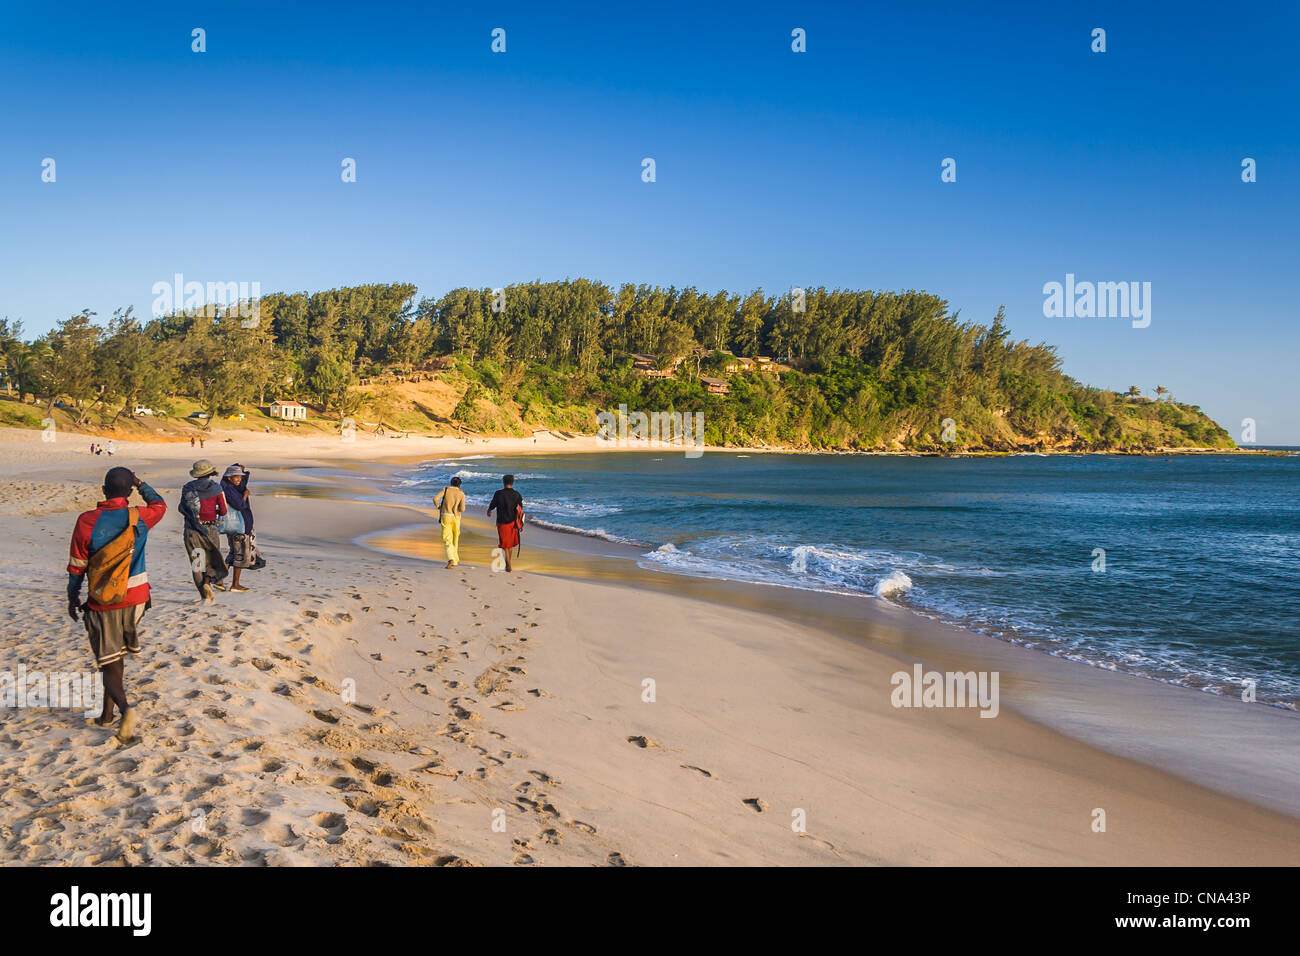 The Libanona beach of Fort Dauphin (Tolagnaro), southern Madagascar Stock  Photo - Alamy